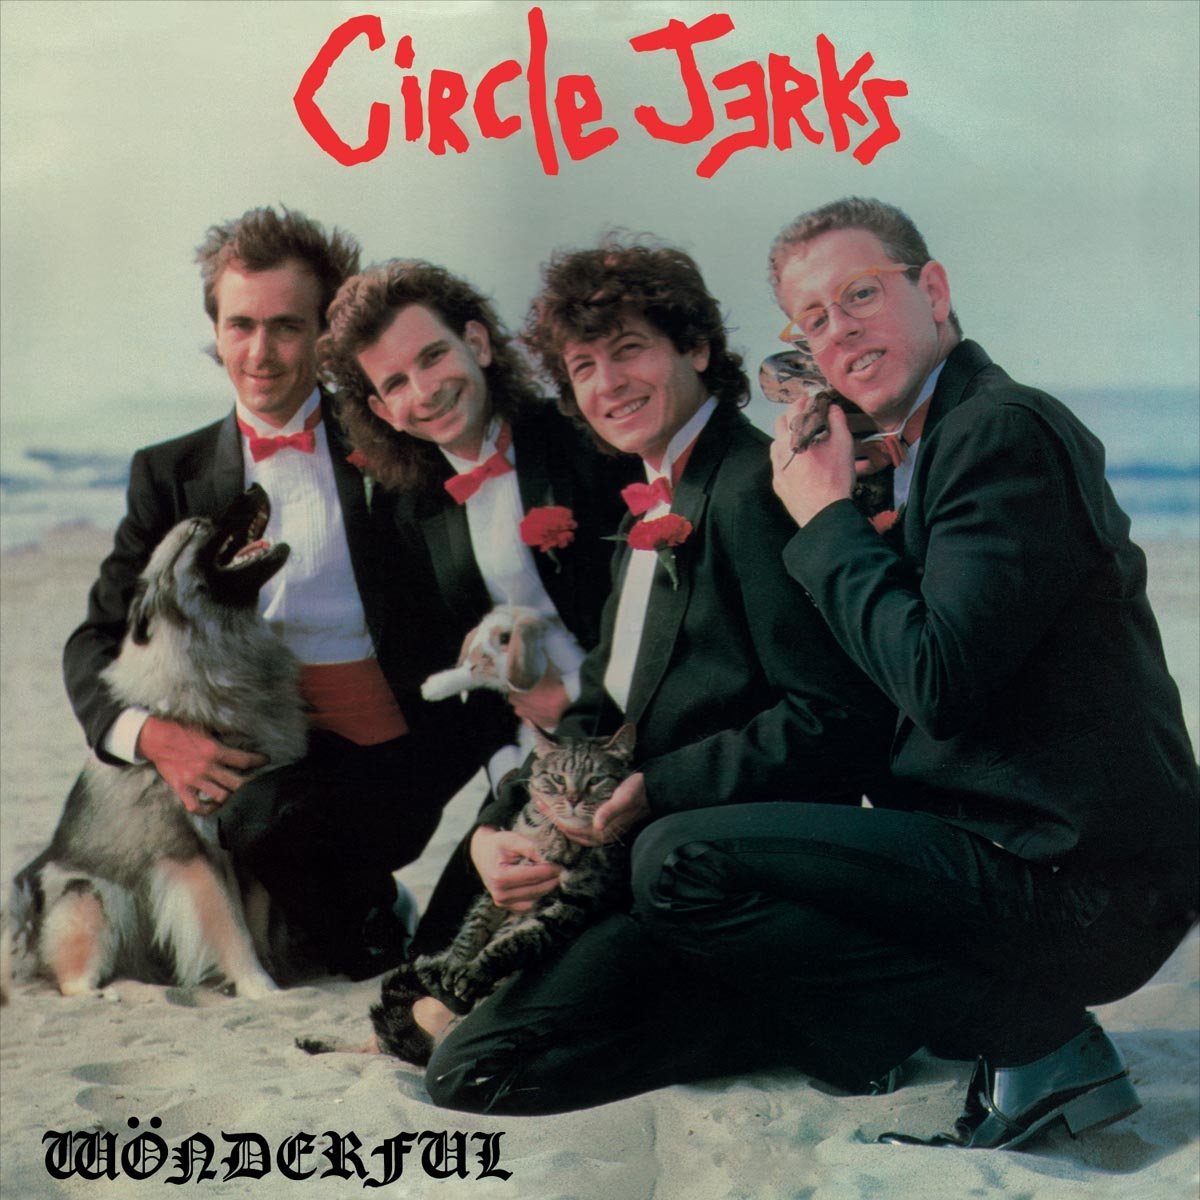 Circle Jerks "Wonderful" LP